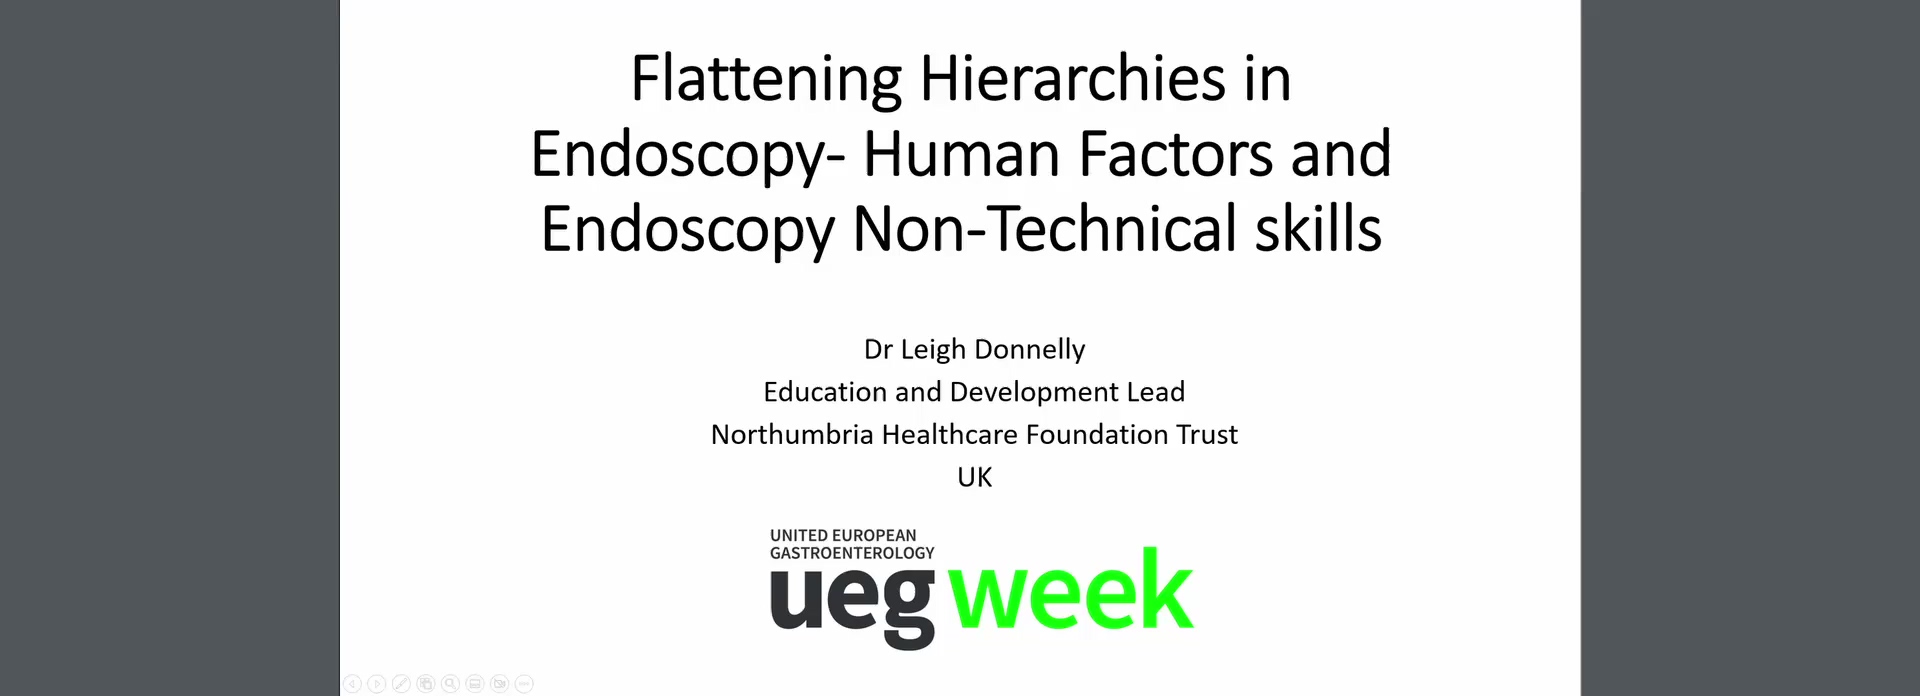 Flattening hierarchies in endoscopy human factors in Endoscopy: ENTS endoscopy non-technical skills